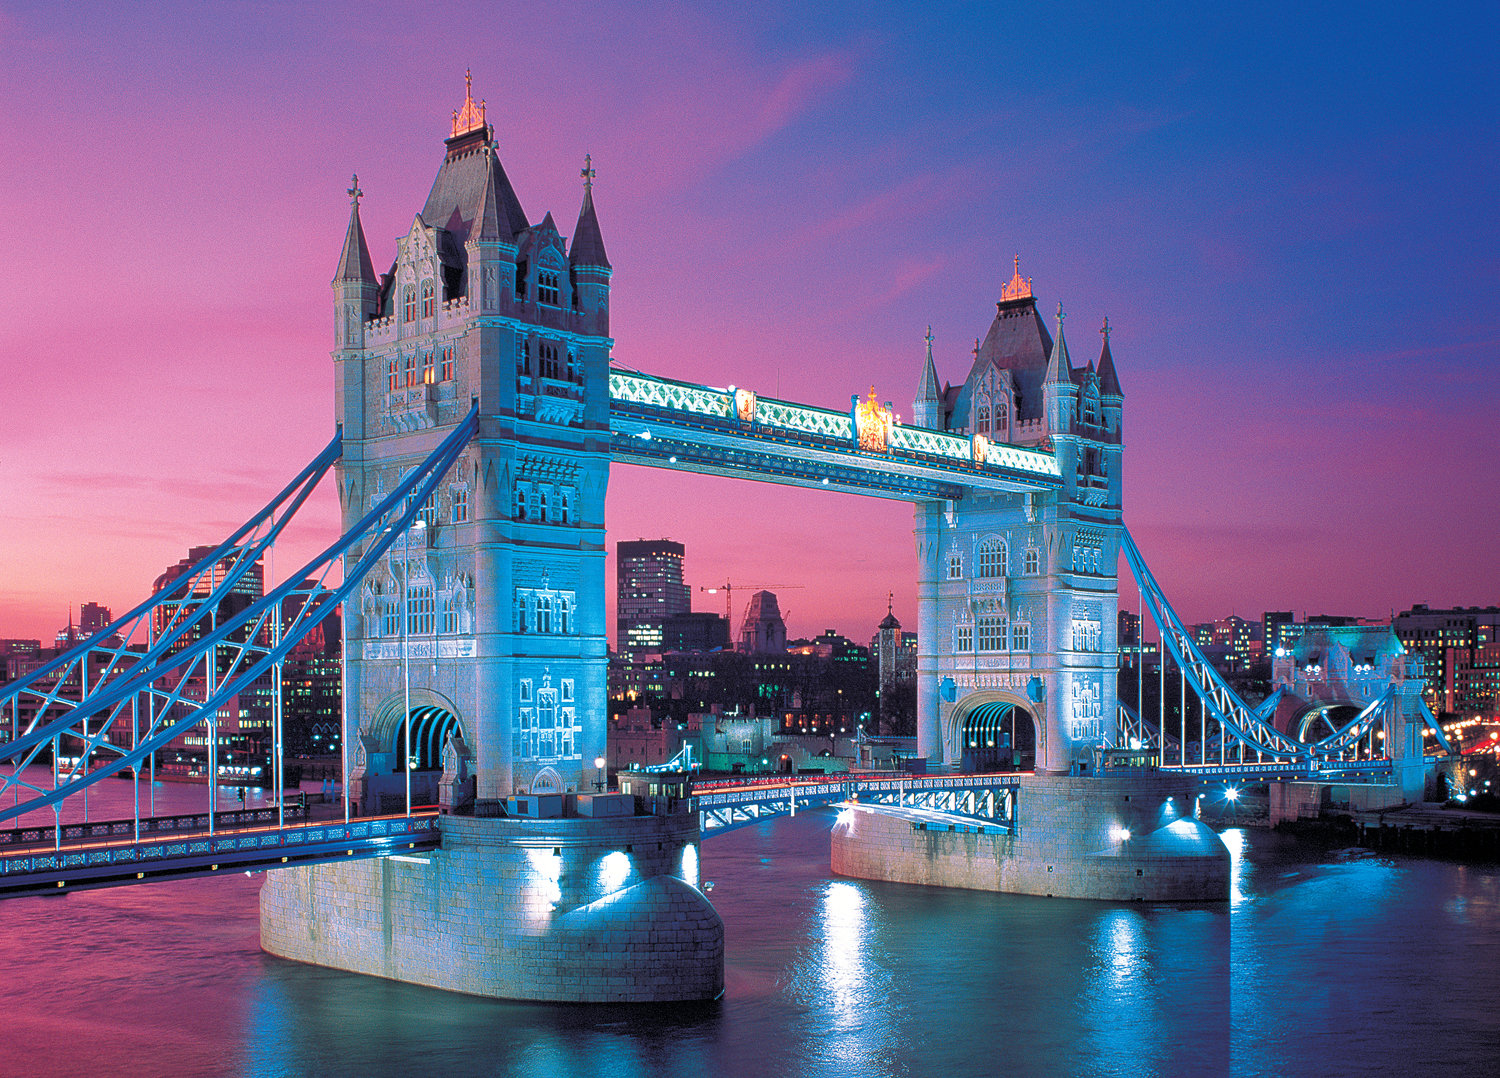 Tower Bridge, London Landmarks & Monuments Jigsaw Puzzle